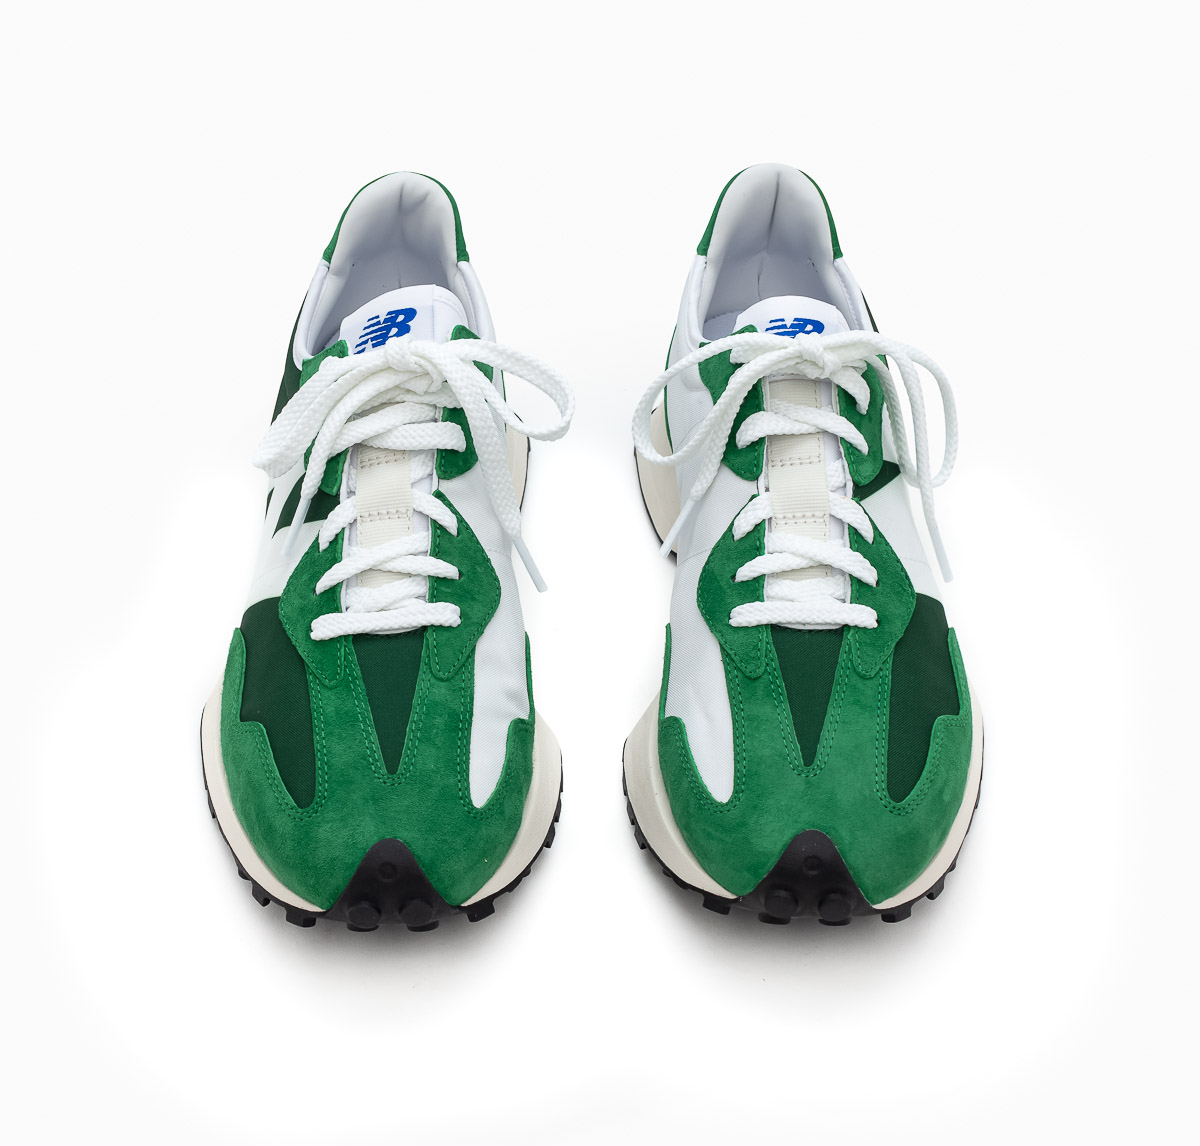 New Balance 327 - Varsity Green pair